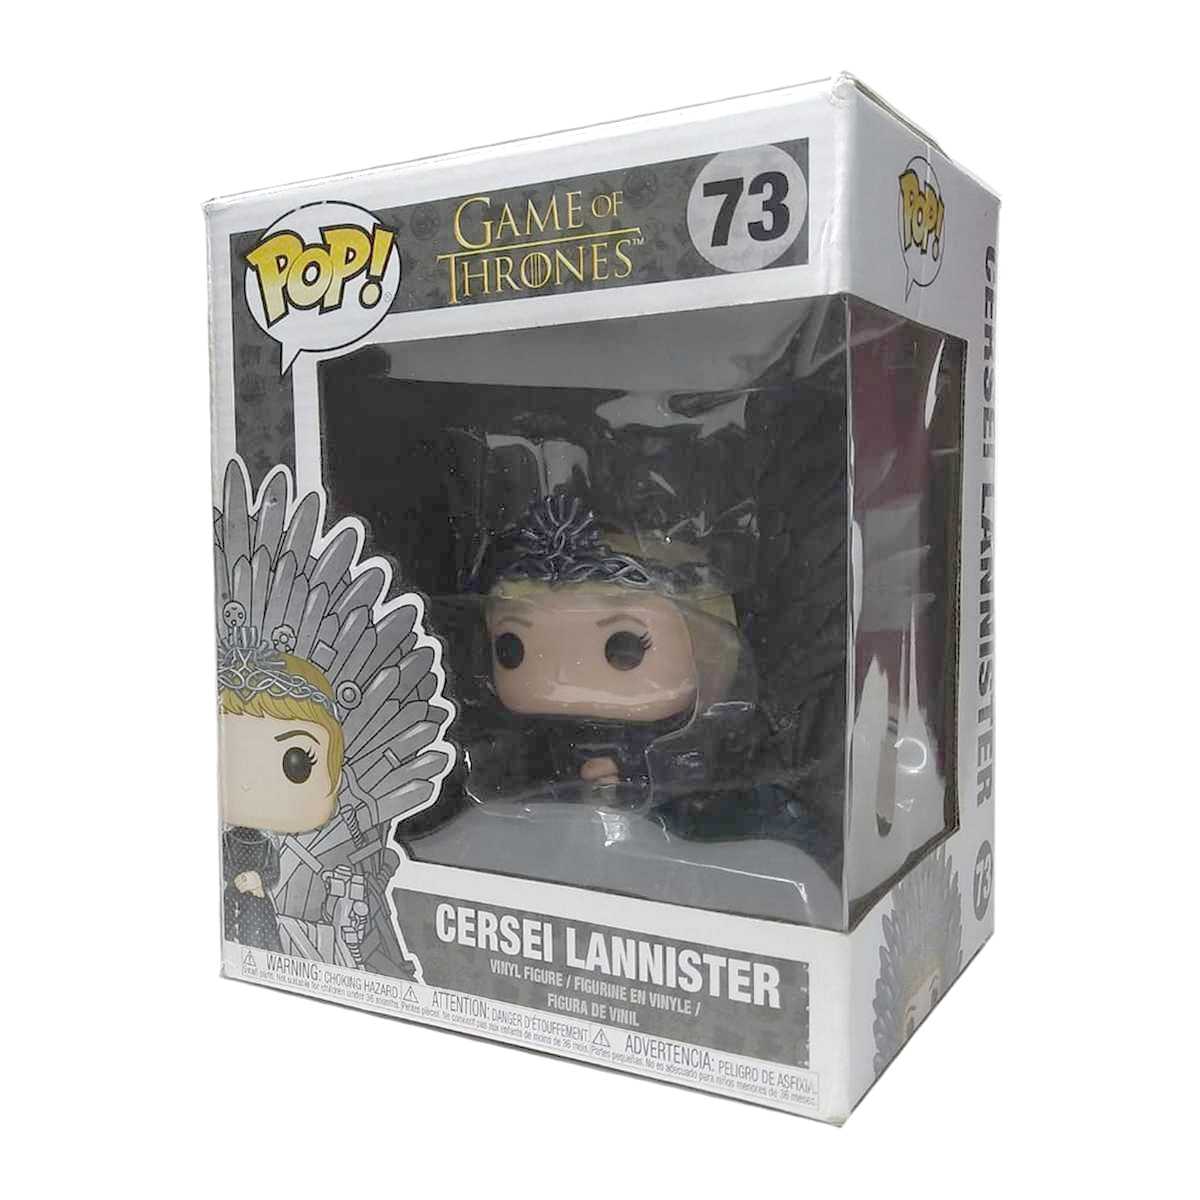 Funko Pop! Television Game of Thrones Cersei Lannister no trono vinyl figure número 73